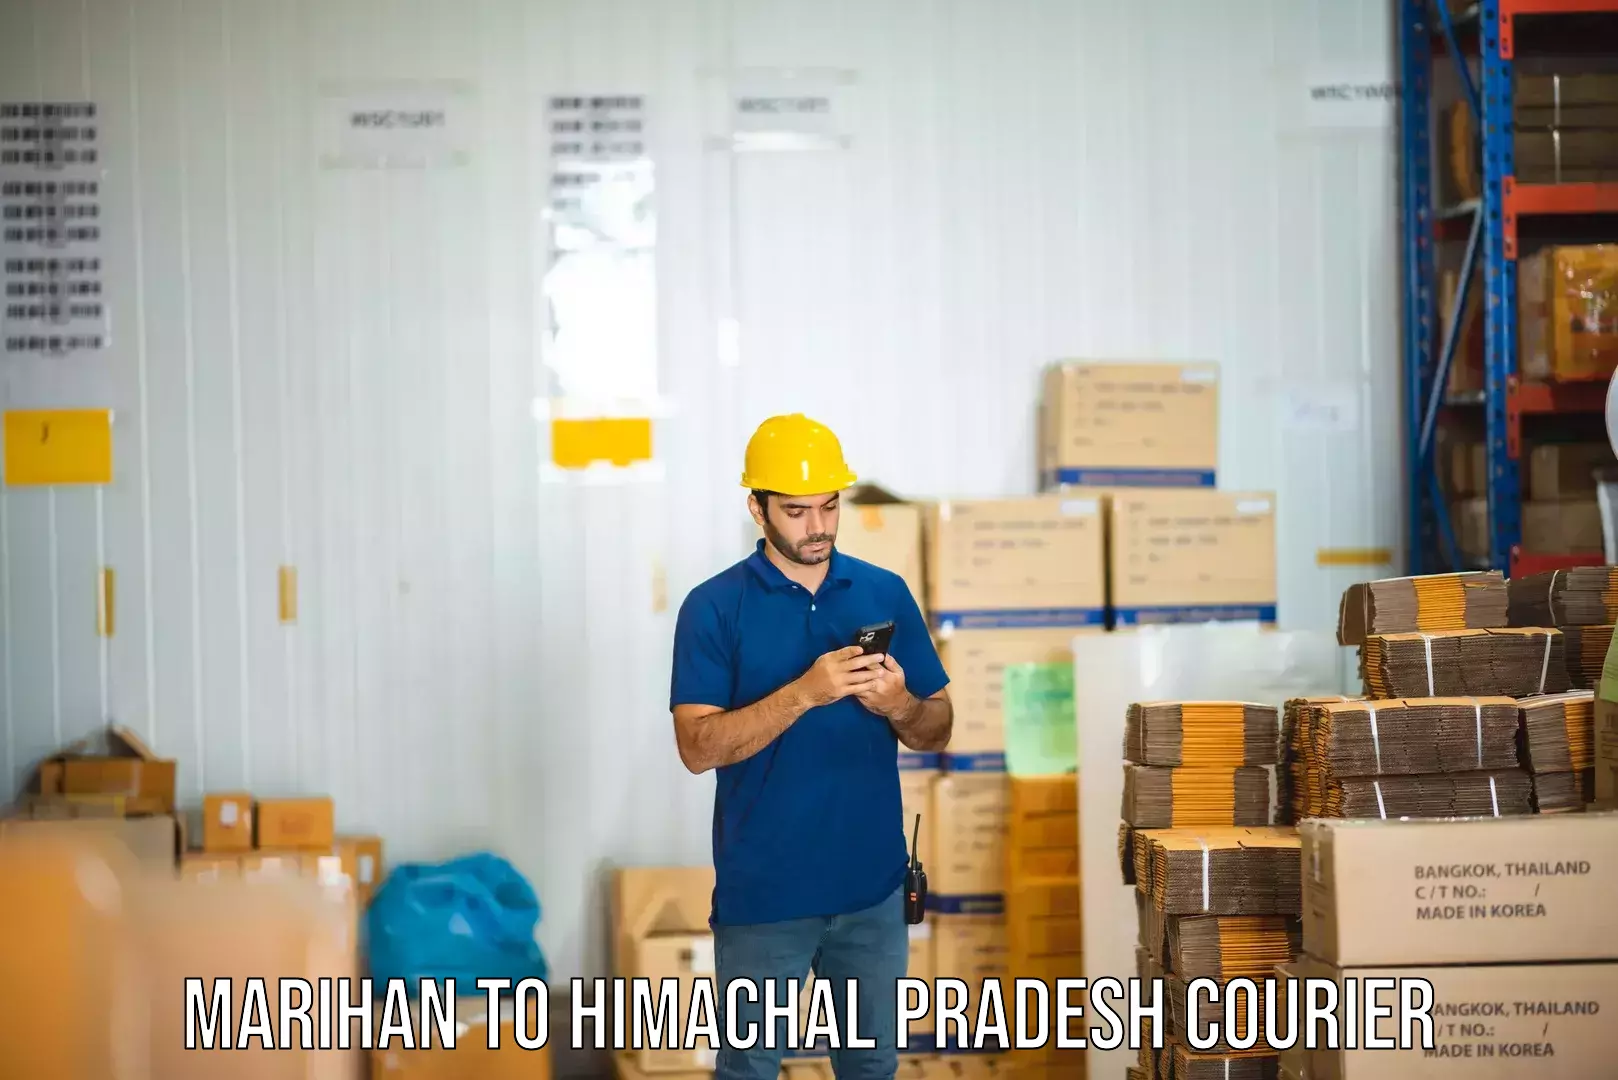 Cash on delivery service Marihan to Himachal Pradesh